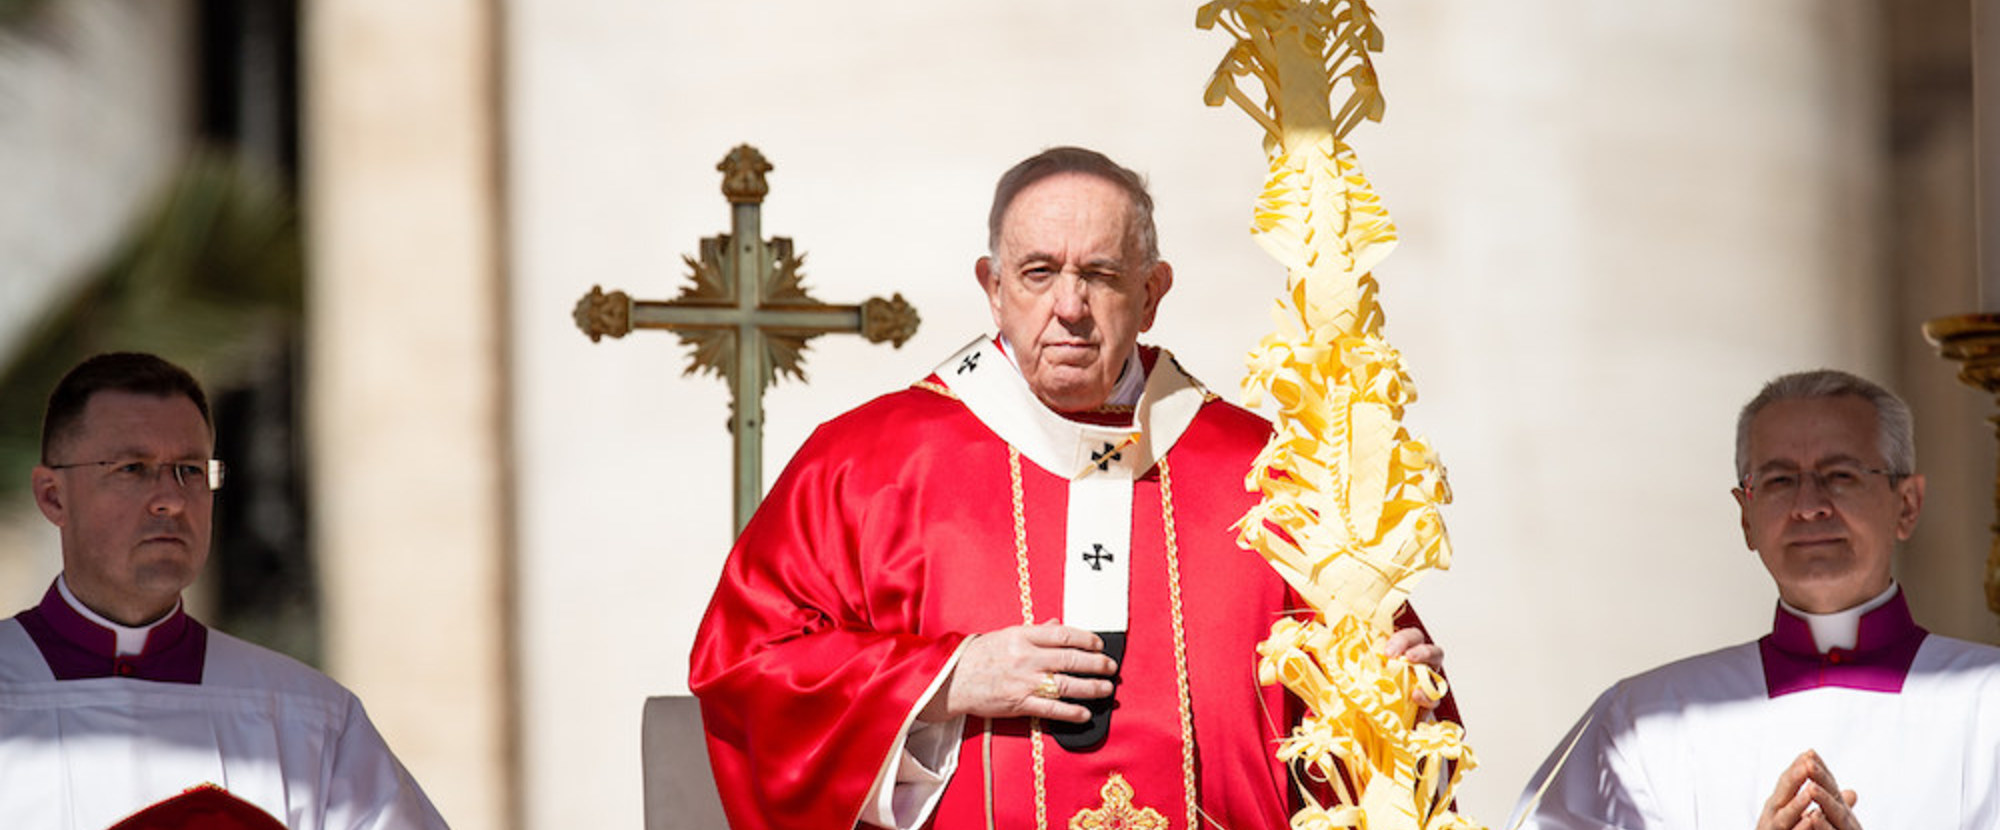 Papst Franziskus feiert die Heilige Messe am Palmsonntag am 10. April 2022 im Vatikan.